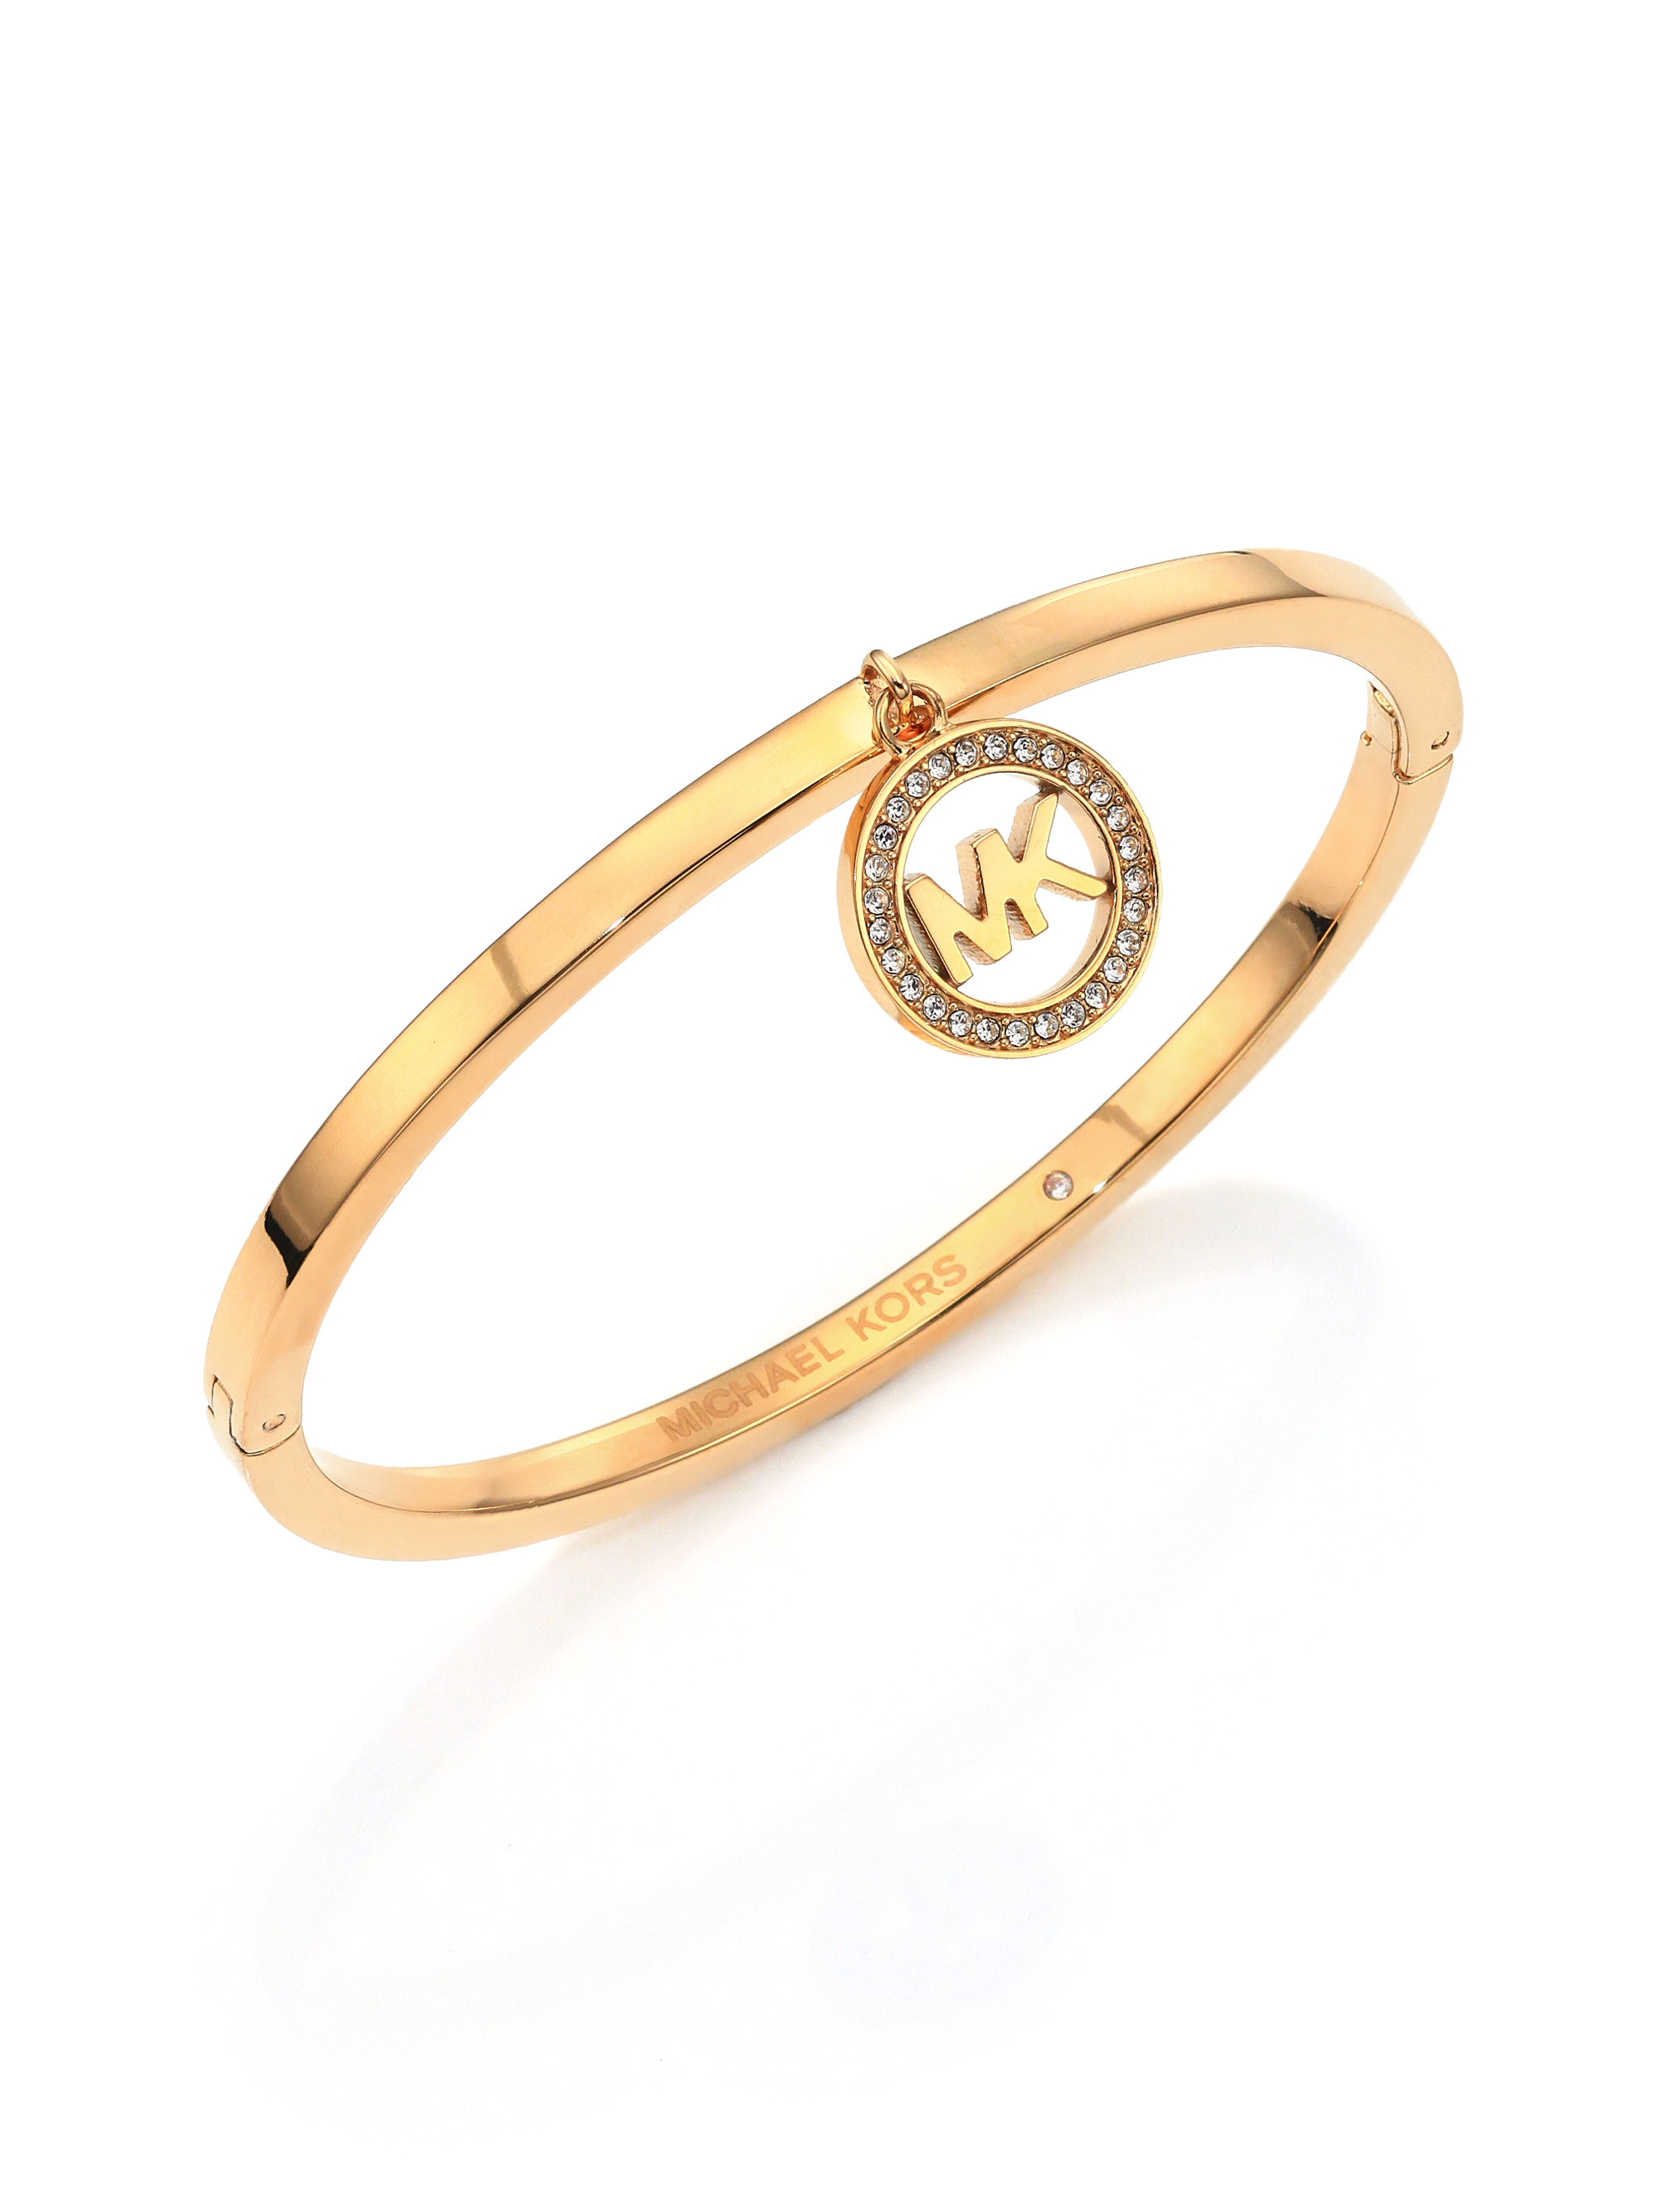 Michael Kors Fulton Logo Charm Bangle Bracelet/goldtone in Metallic - Lyst